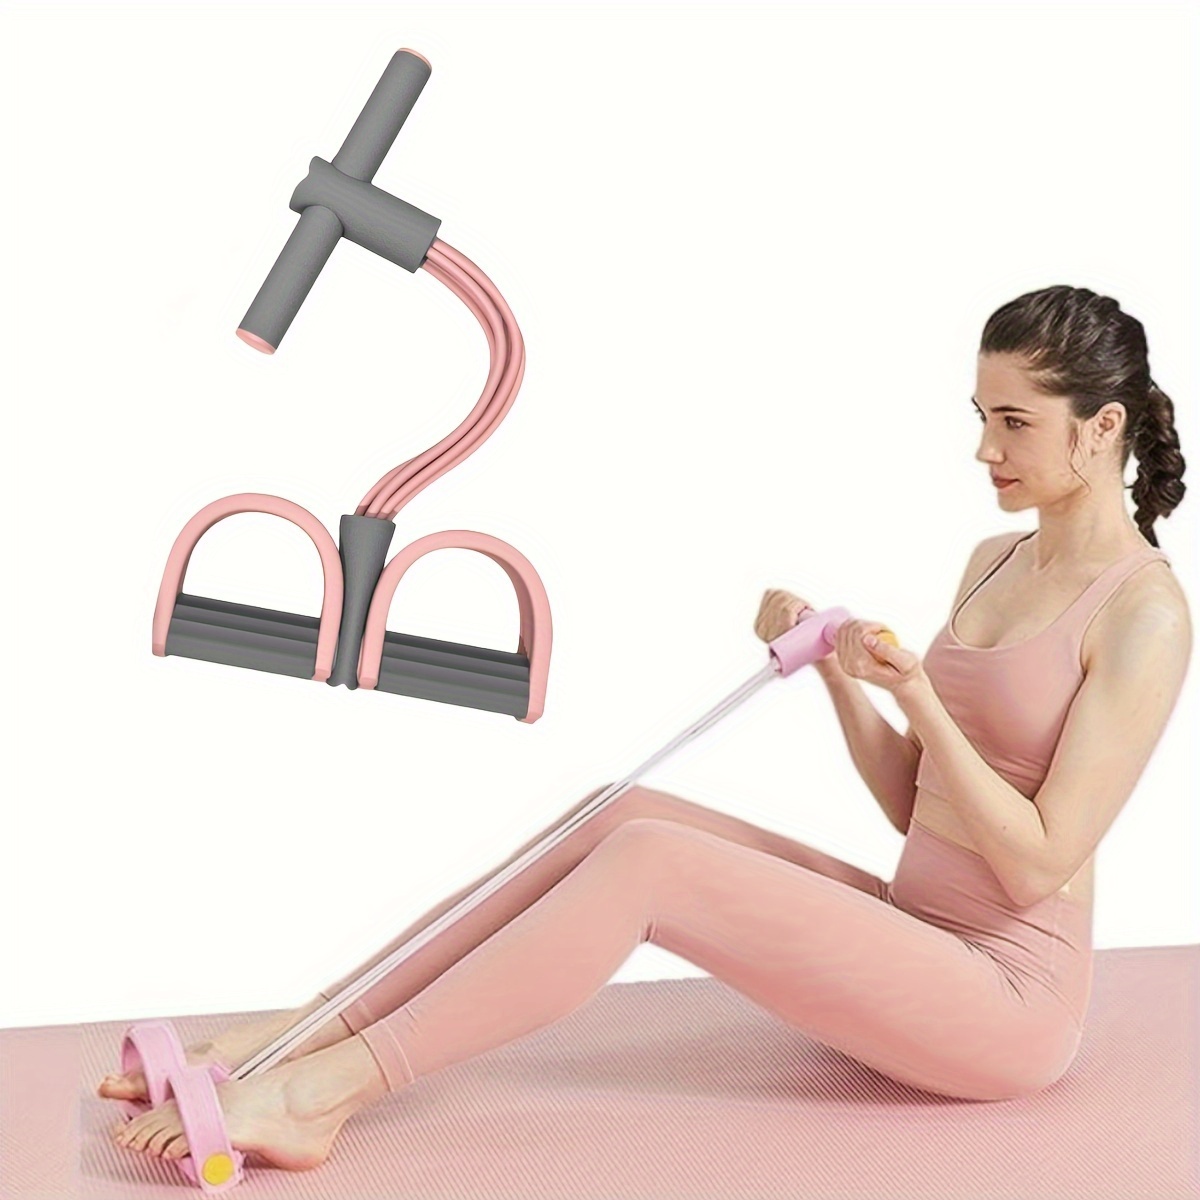 

6-tube & Yoga Pedal Puller - Versatile Fitness Tool For Full Body Strengthening, Pilates & Home Gym Workouts - Durable Tpe Material